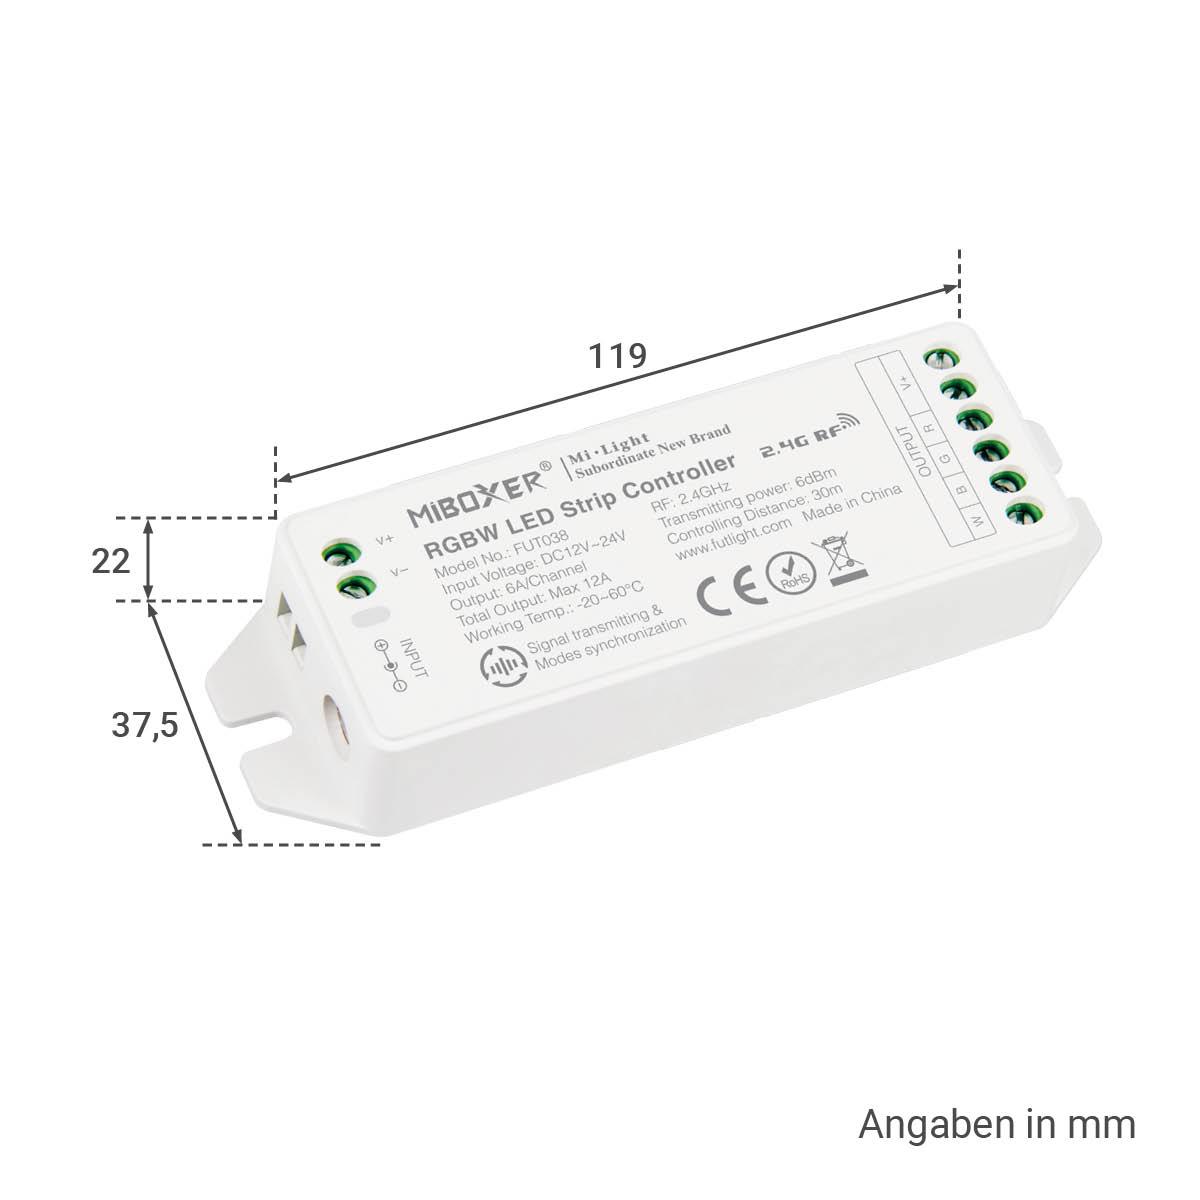 MiBoxer RGBW LED Controller 4 Kanal 12/24V Multifunktion LED Strip Panel Steuerung FUT038M